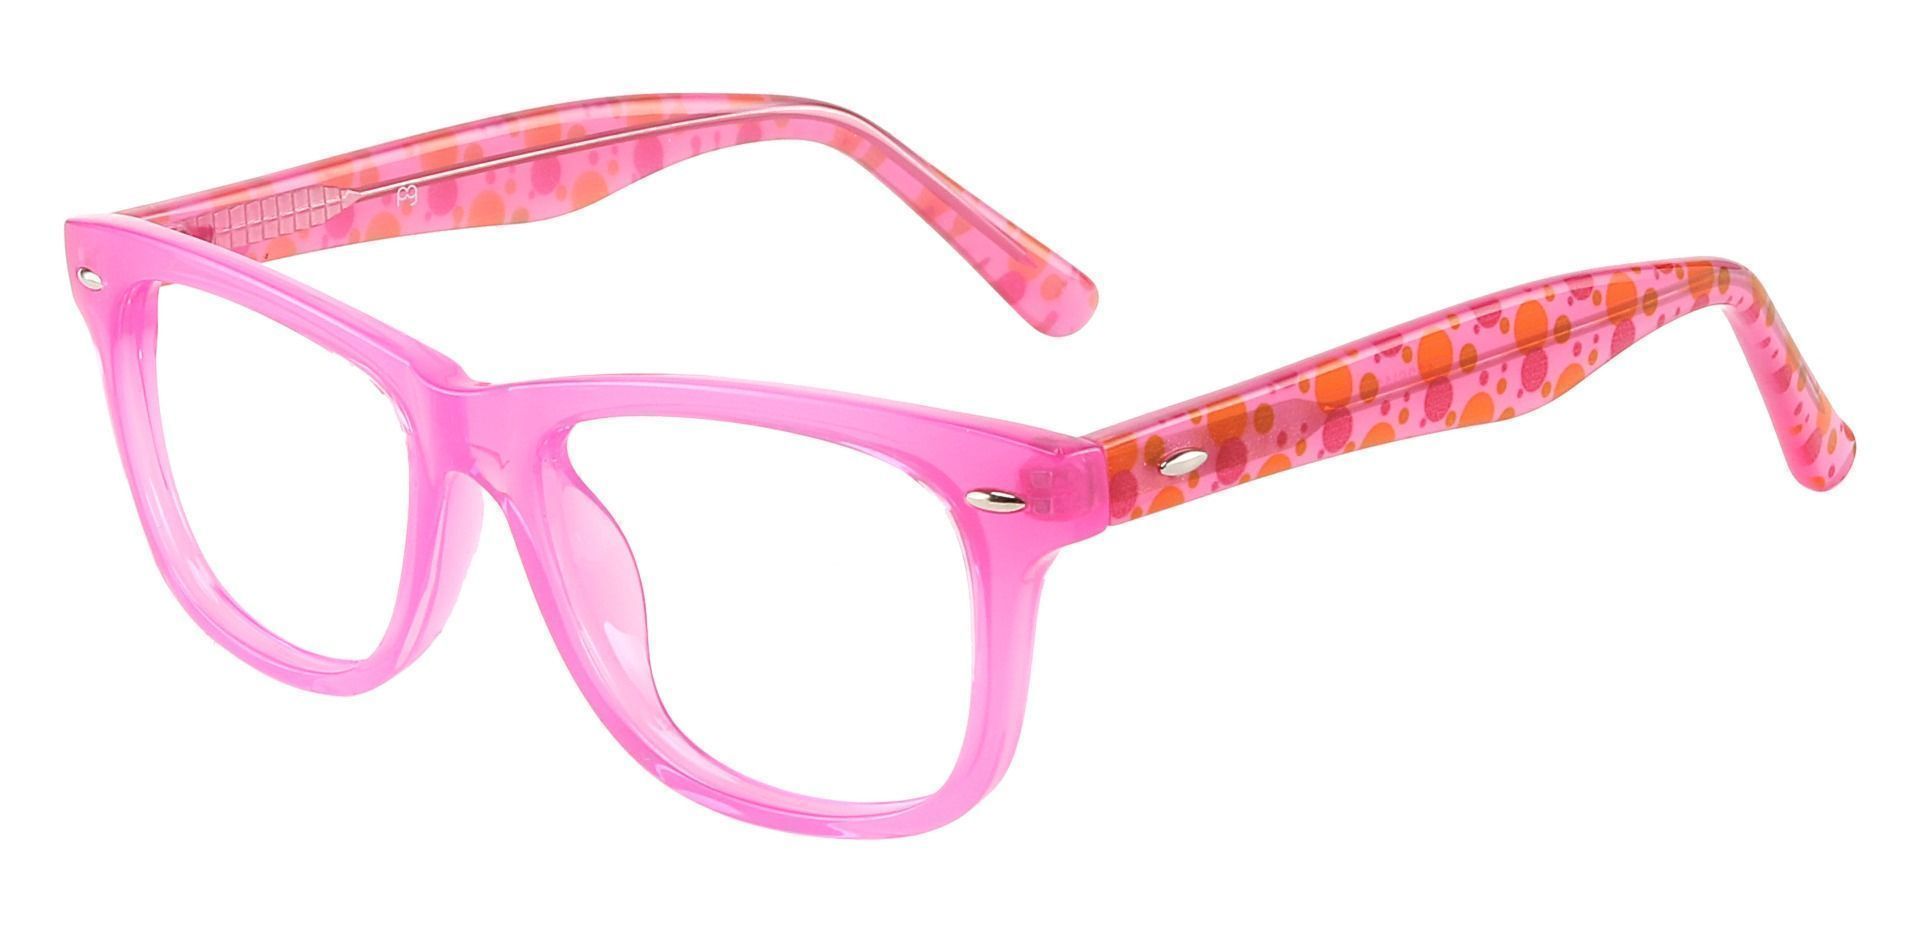 Eureka Square Prescription Glasses - Pink